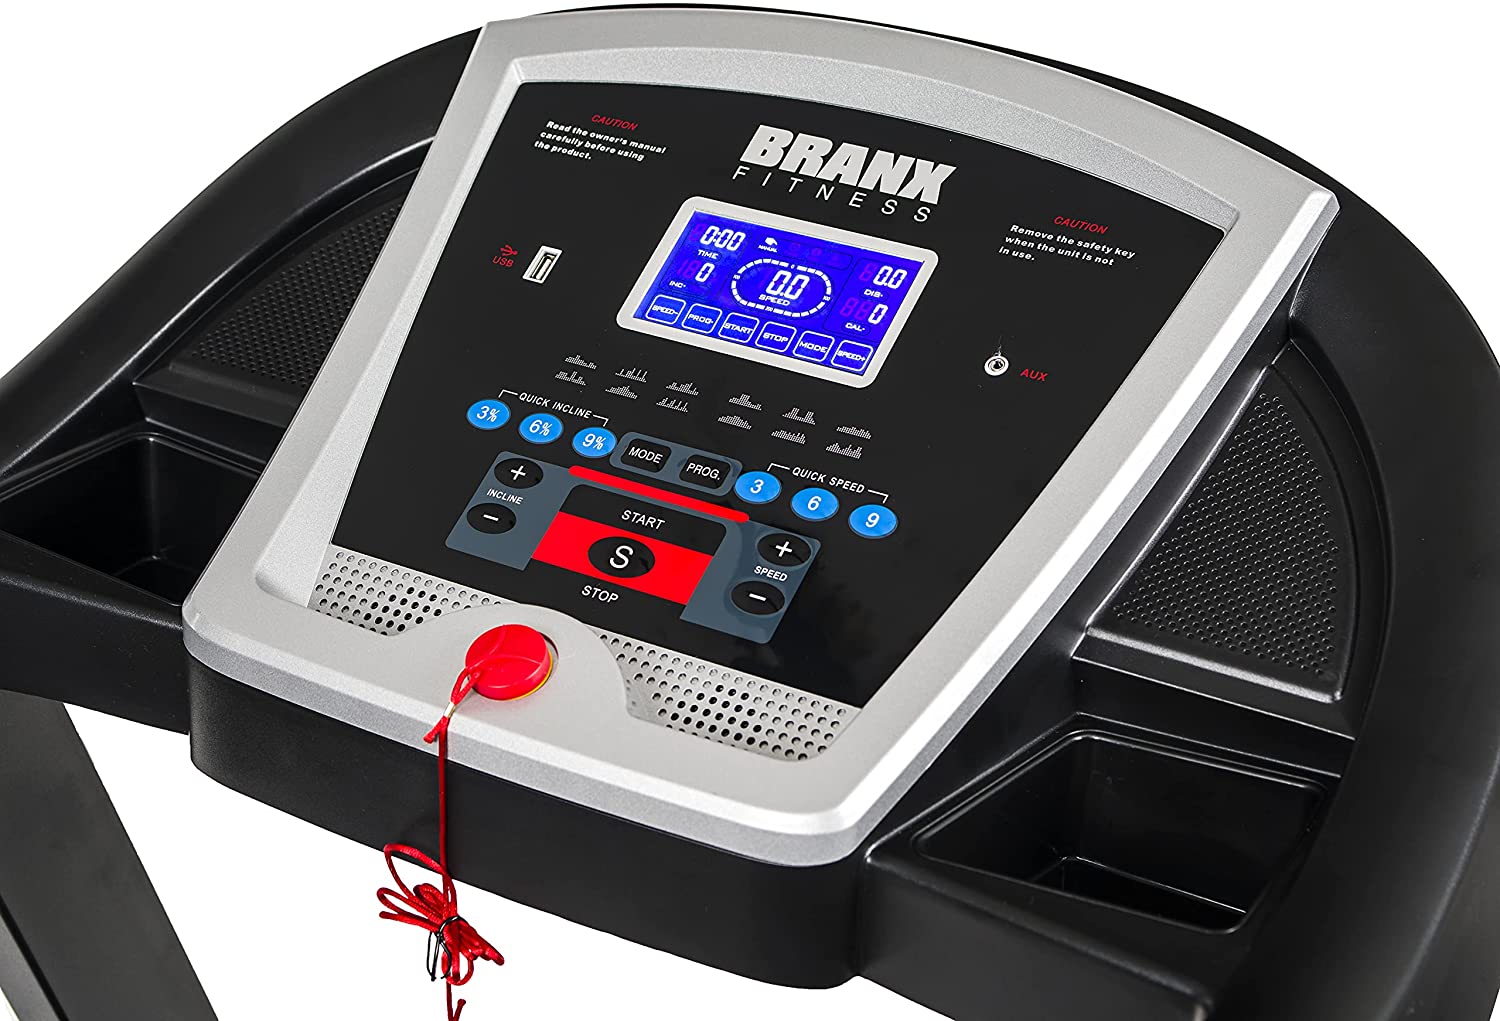 Branx Fitness Start Run Treadmill screen features